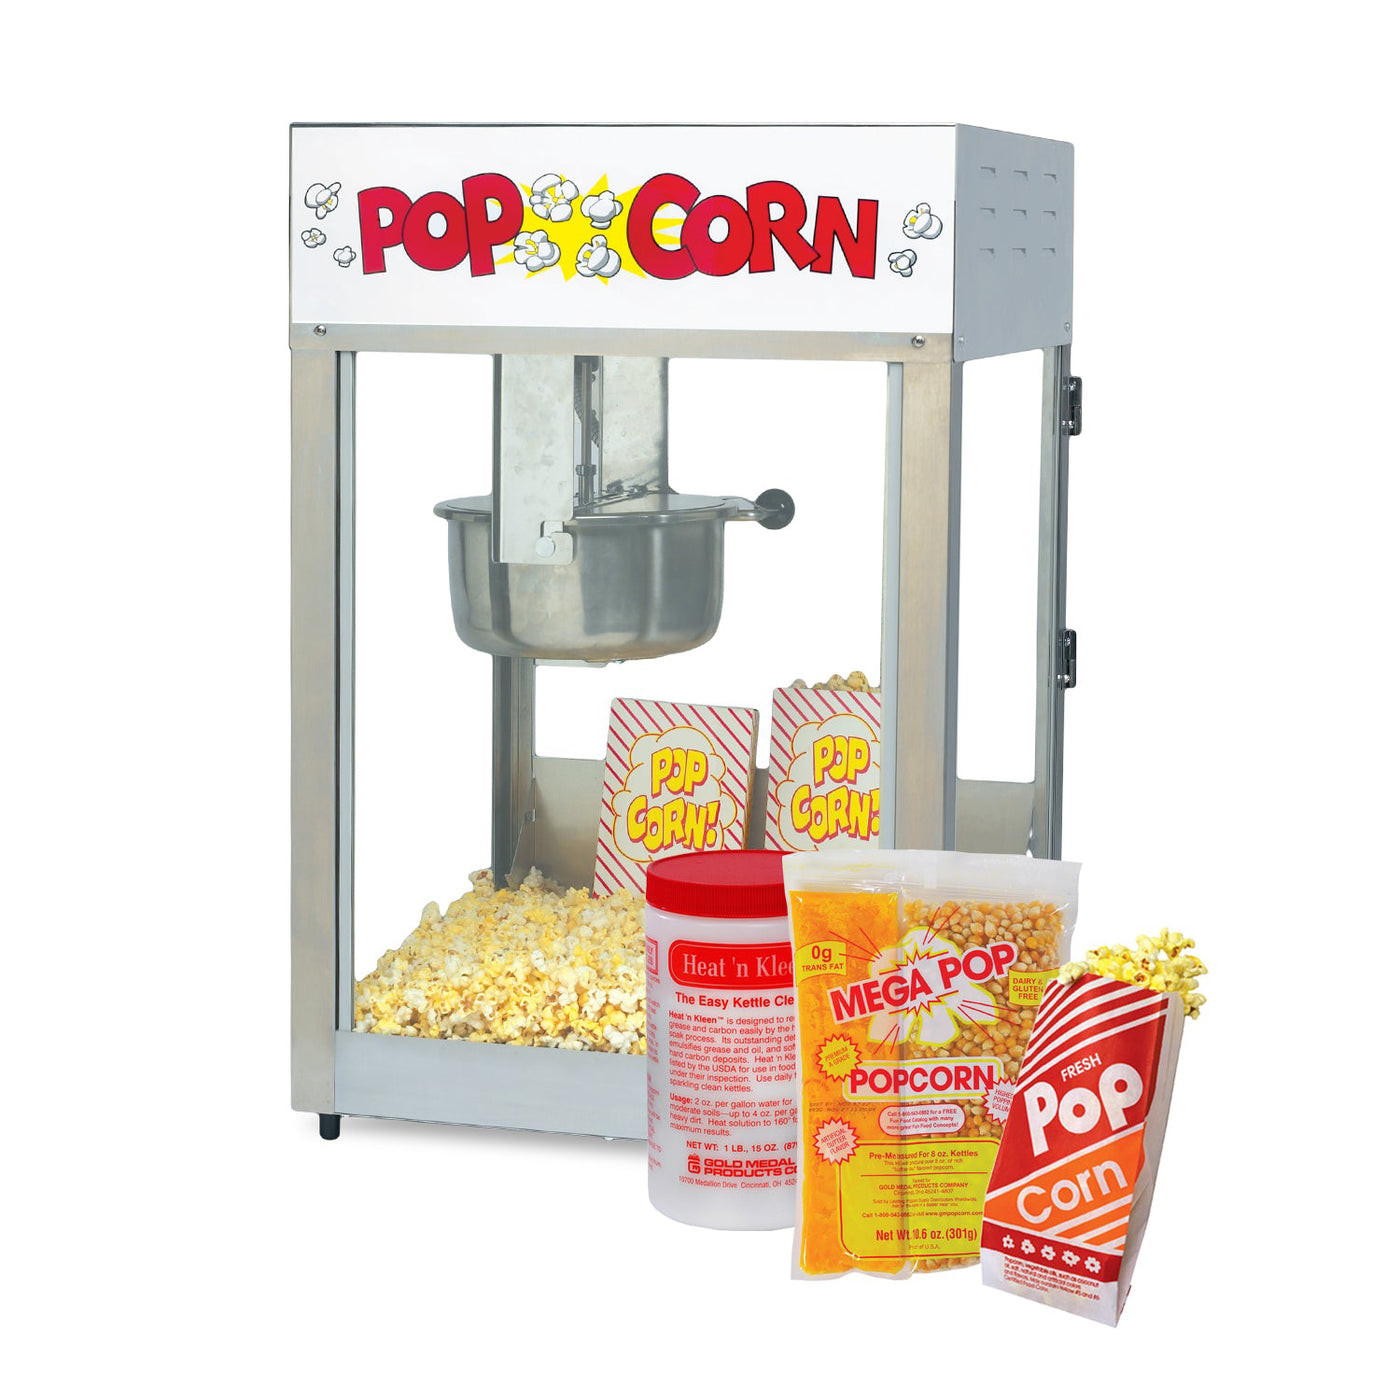 Máquina de popcorn 8 onzas pm-1808 dakota